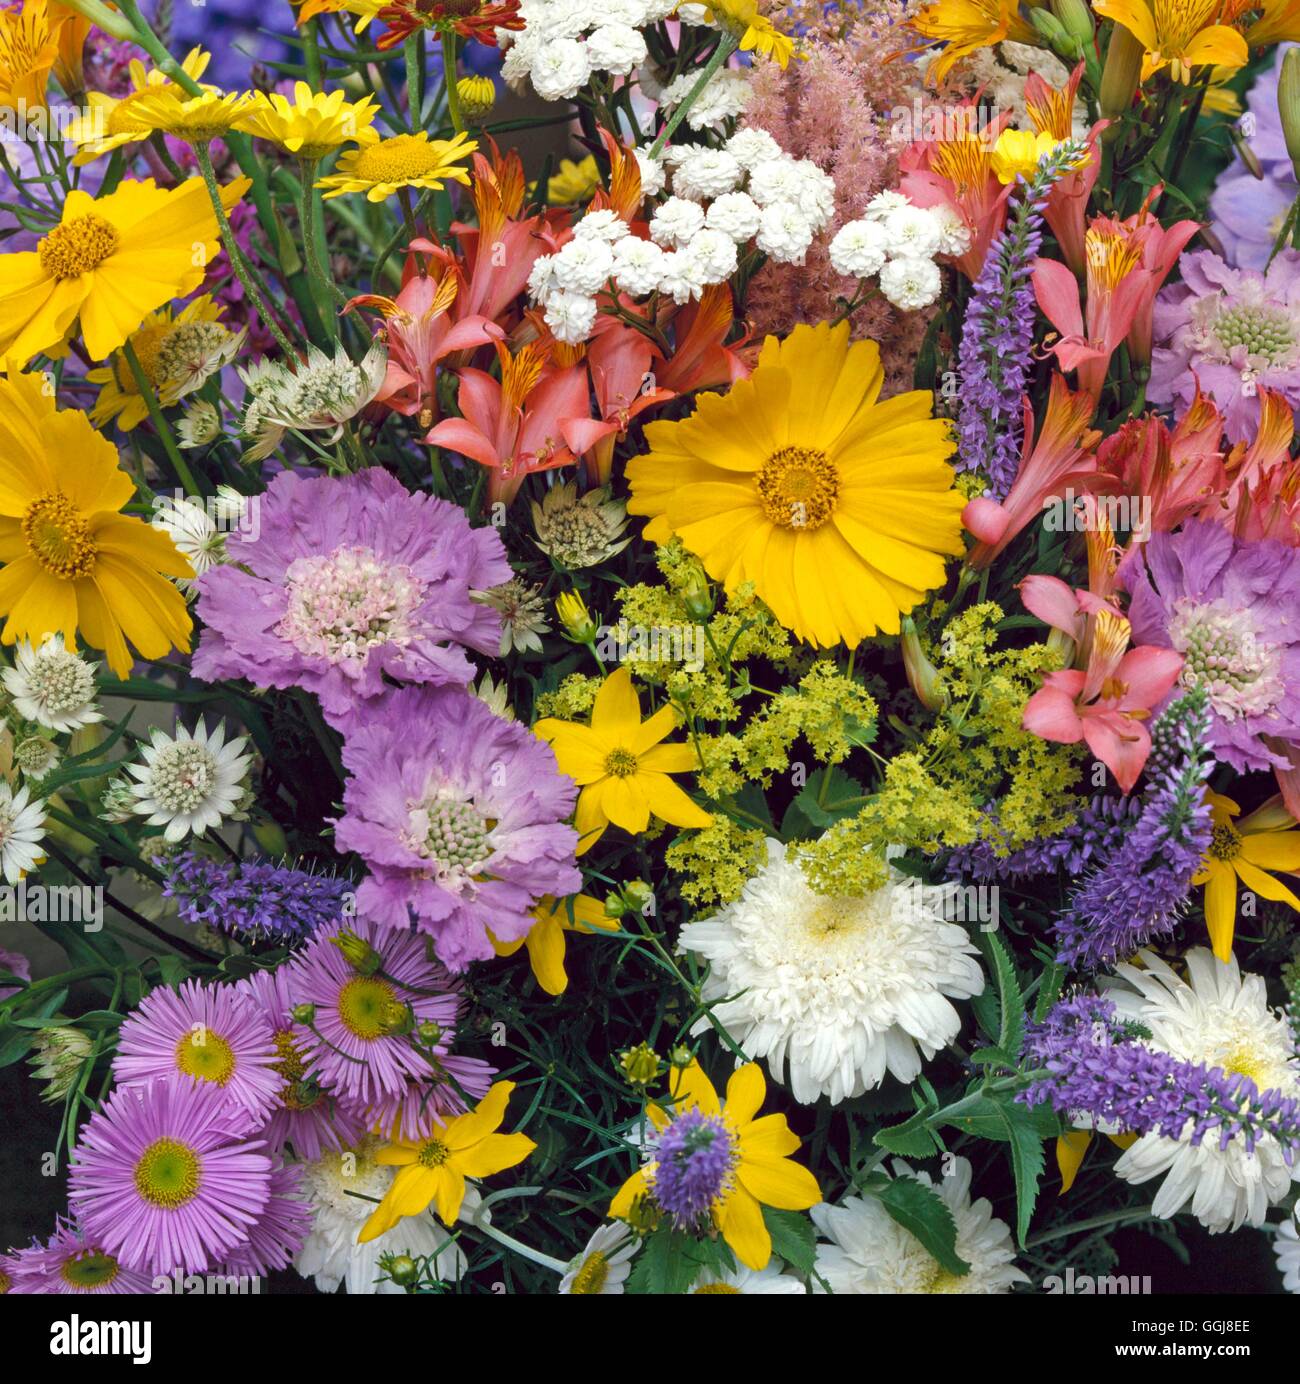 Flower Arrangements/Cut Flowers - Vase of Perennials - Scabious  Bidens  Aster  Astrantia  Veronica  Coreopsis  Achillea  Leucan Stock Photo